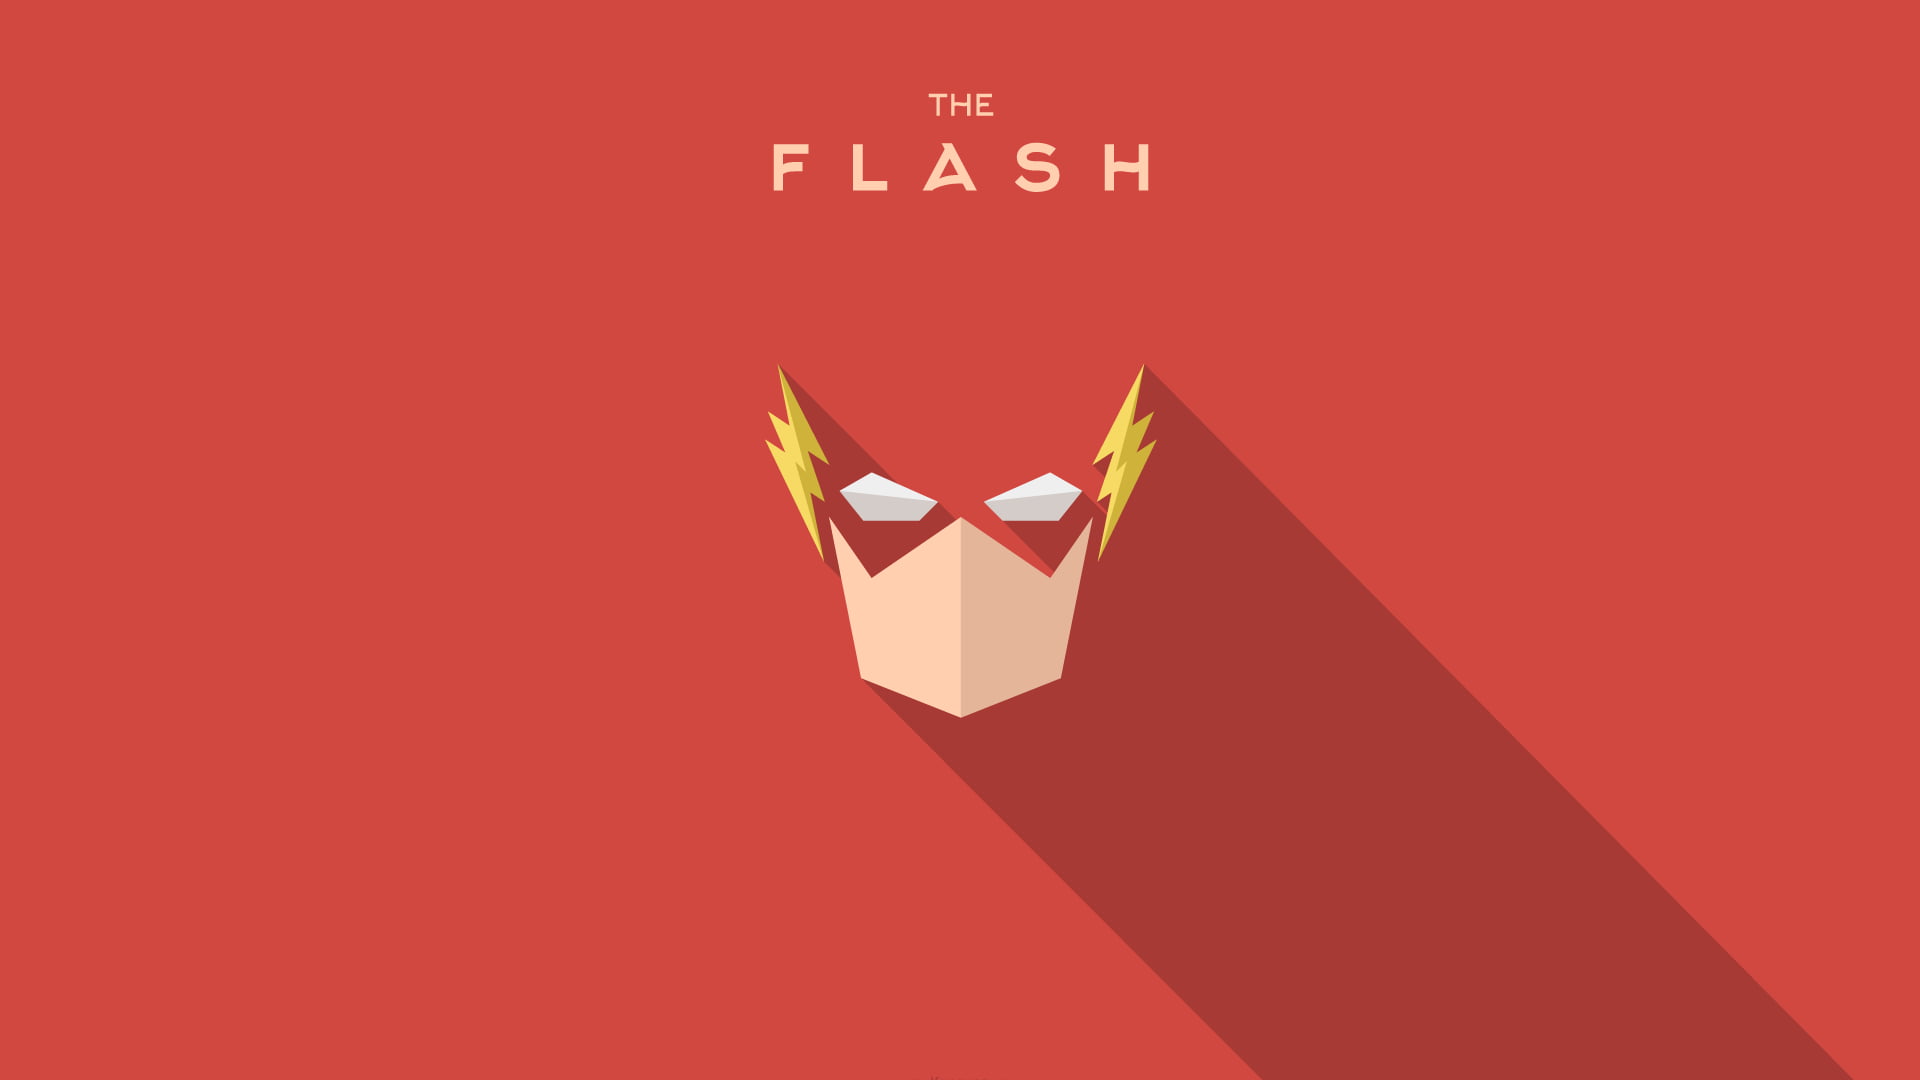 The Flash Logo Wallpaper 14862 - Baltana